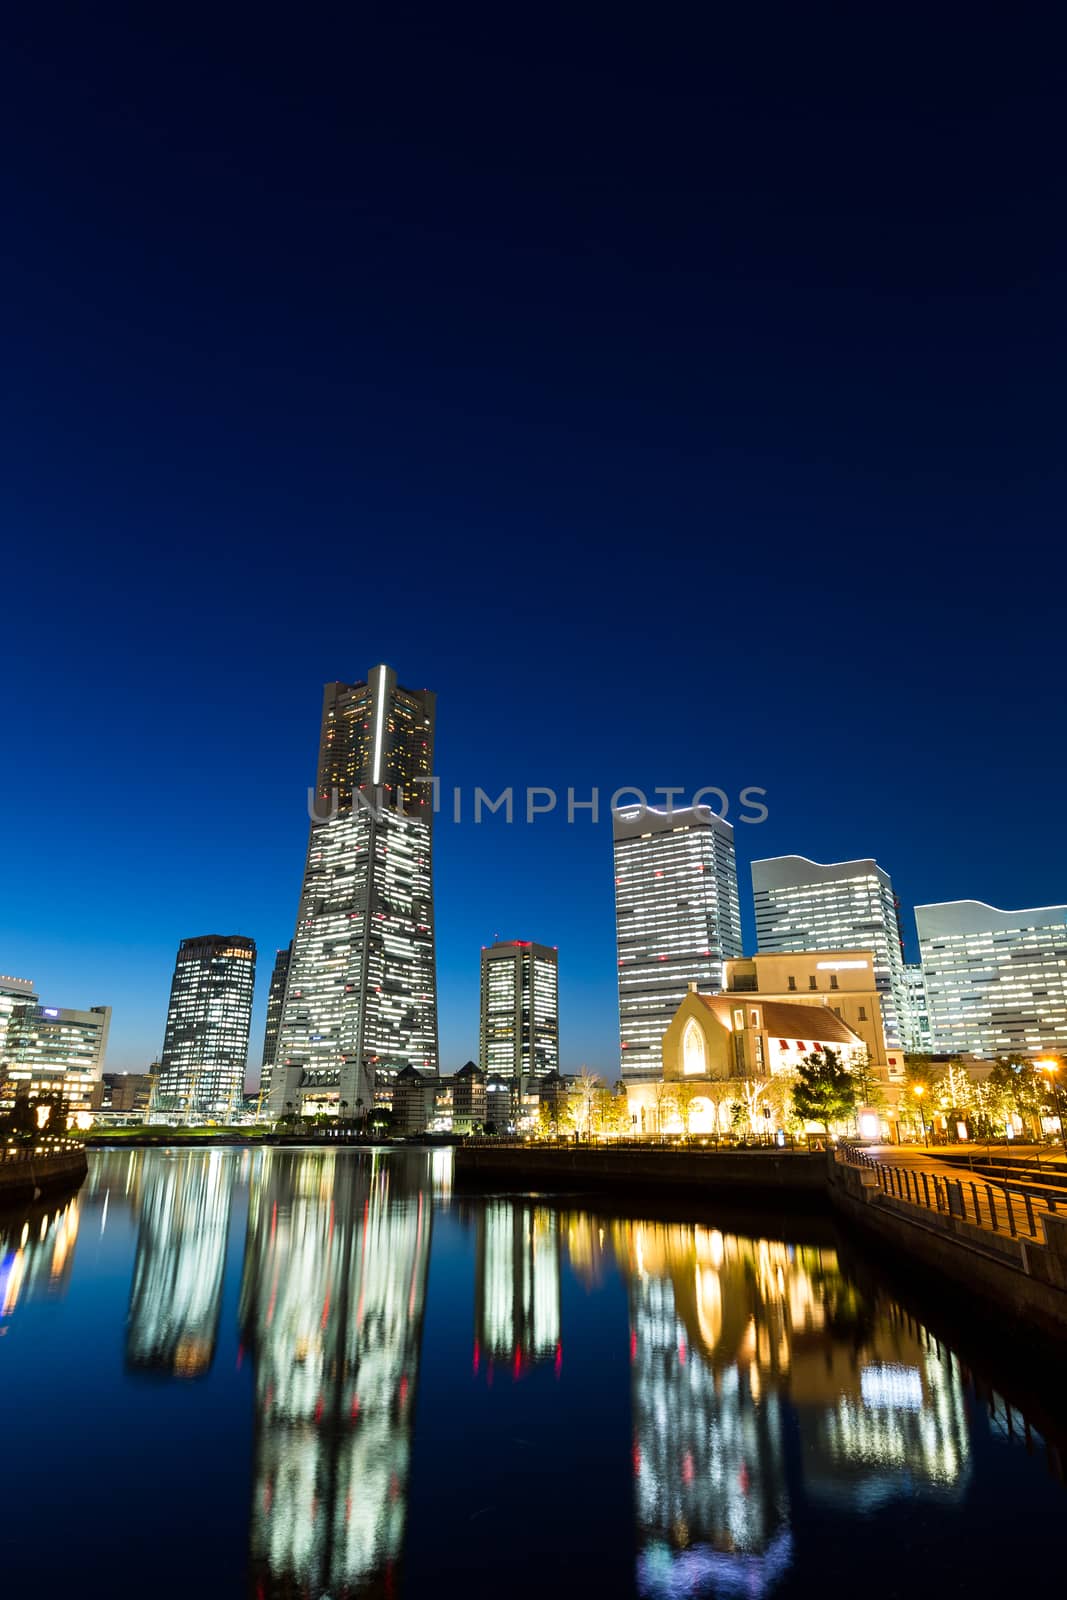 Yokohama city at night by leungchopan